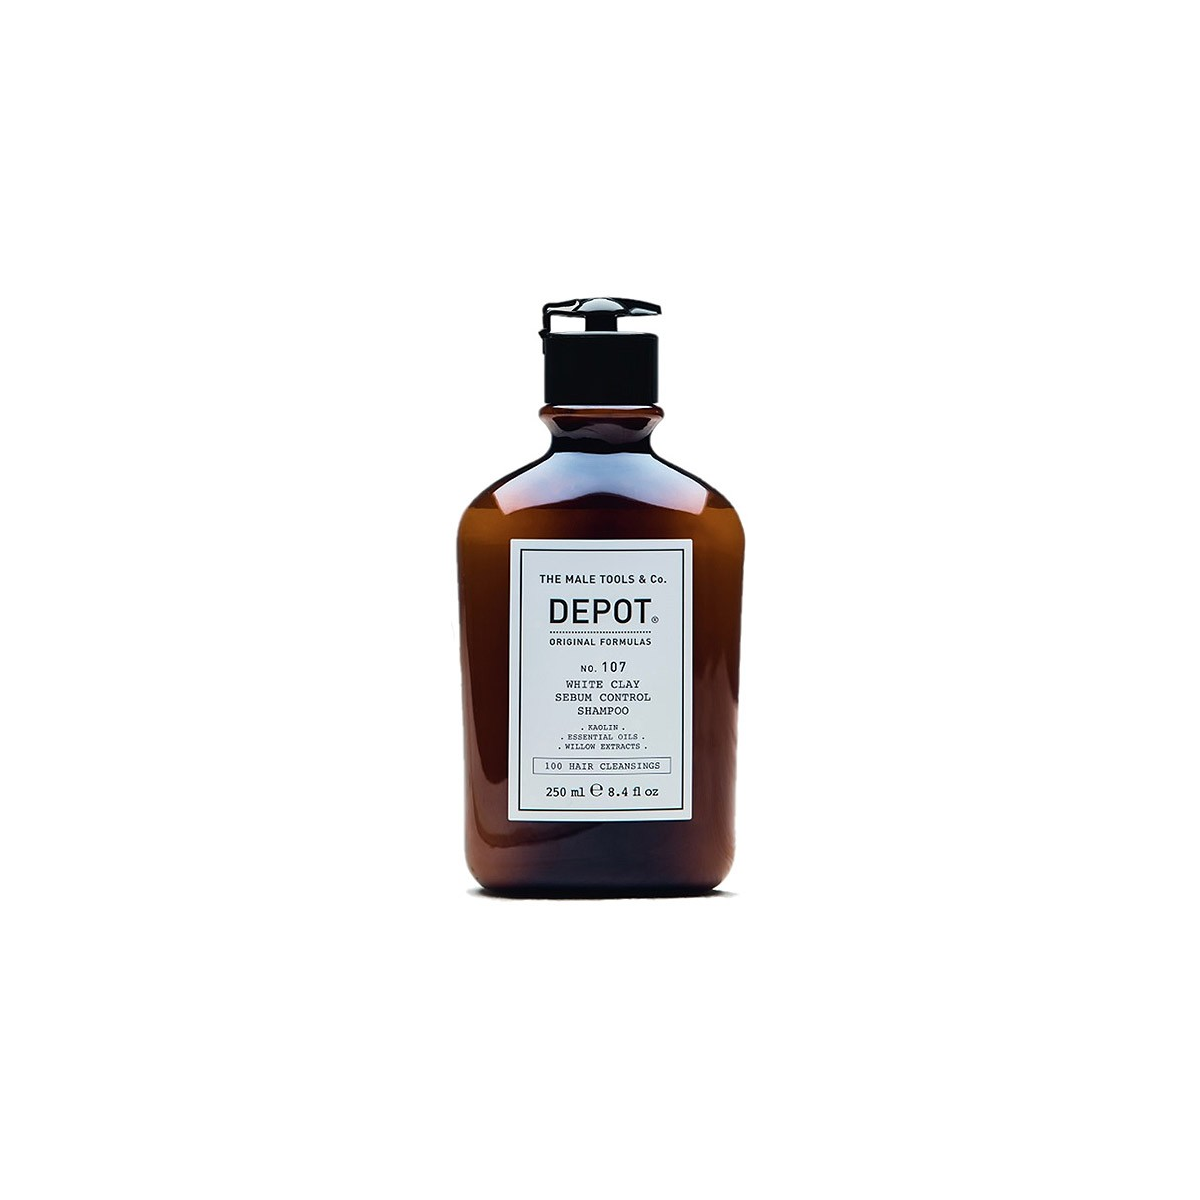 DEPOT - No. 107 WHITE CLAY SEBUM CONTROL SHAMPOO (250ml) Shampoo anti grasso